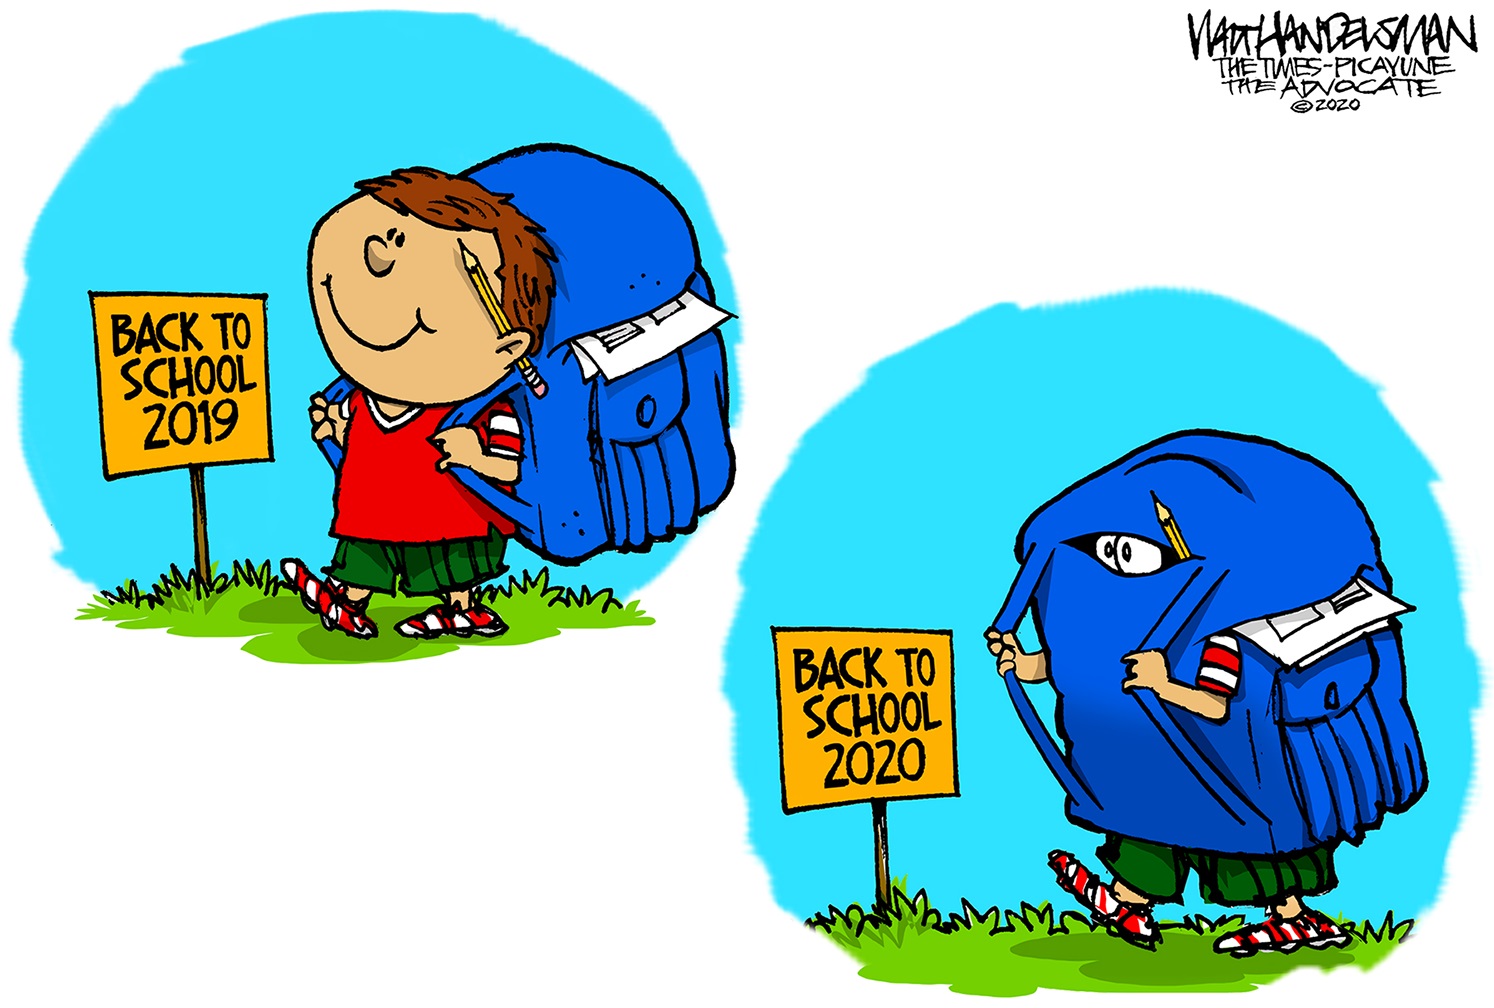 cartoon - Wadhandelsman The TwesPicayune The Advocate zozo Back To School 2019 Ca Mara Back To School 2020 Malborzone wh